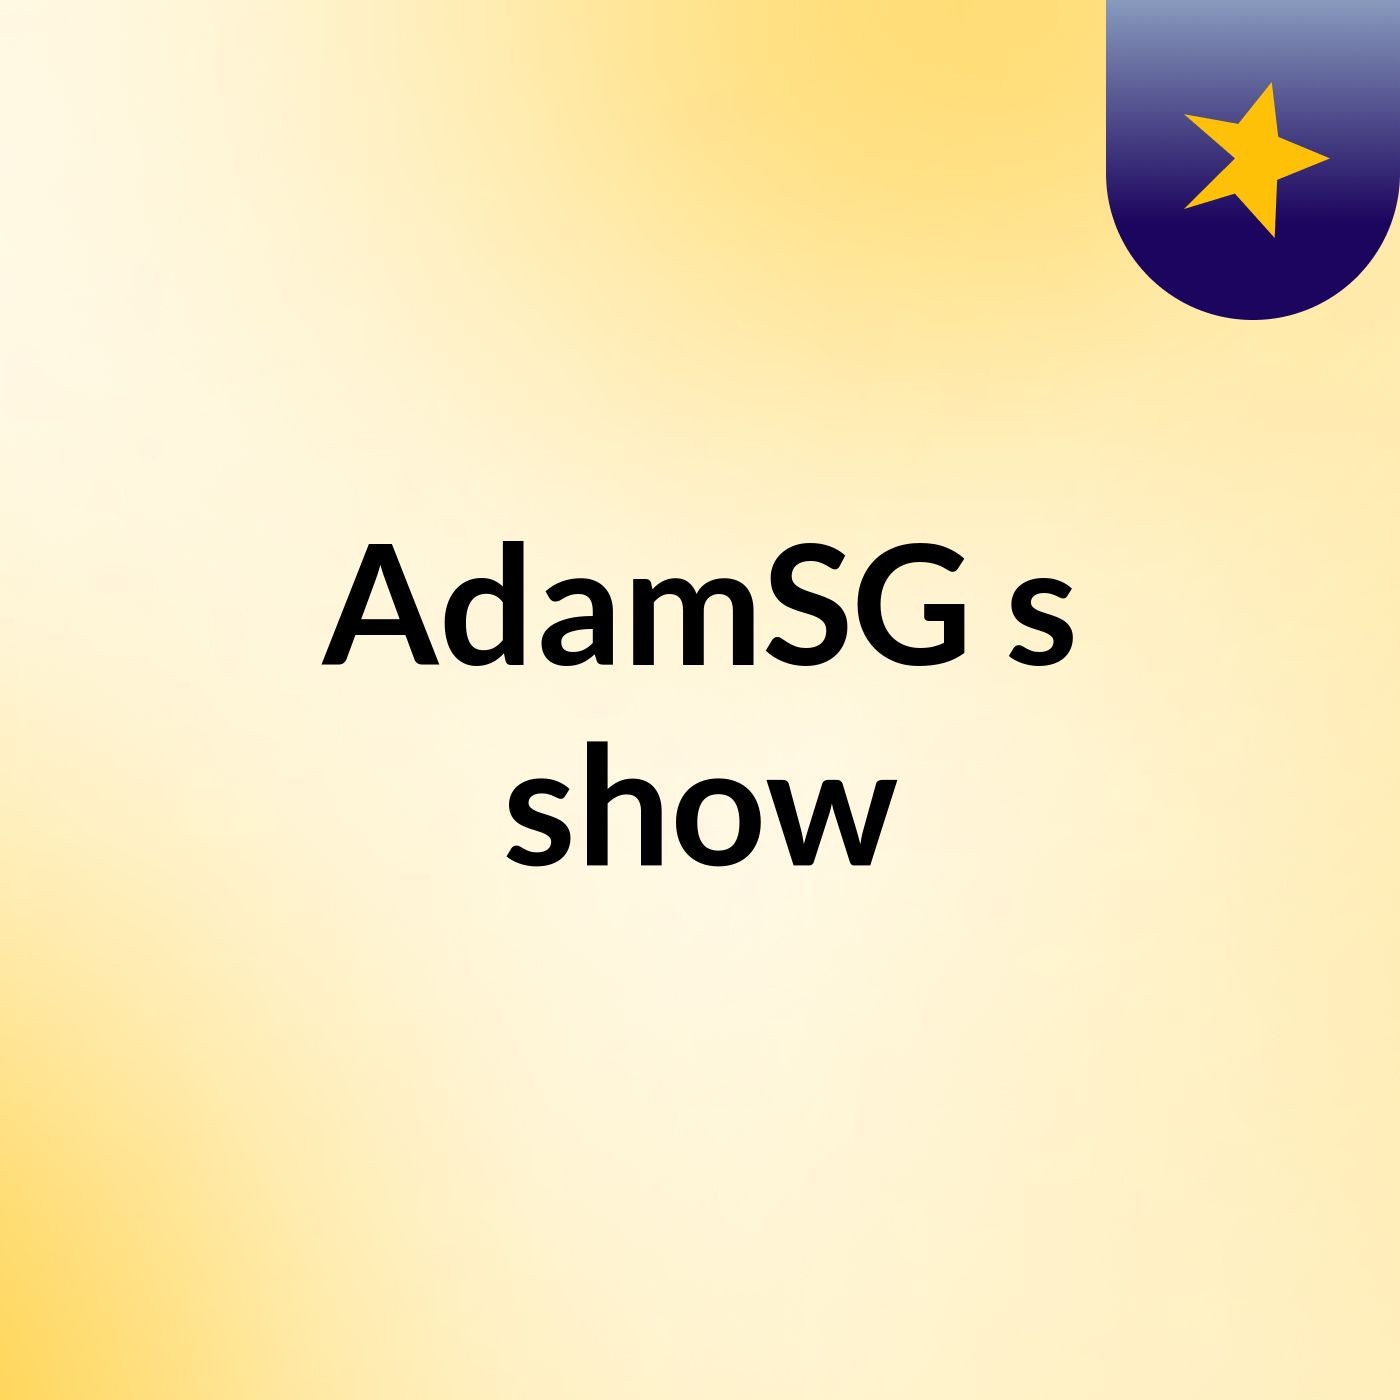 AdamSG's show